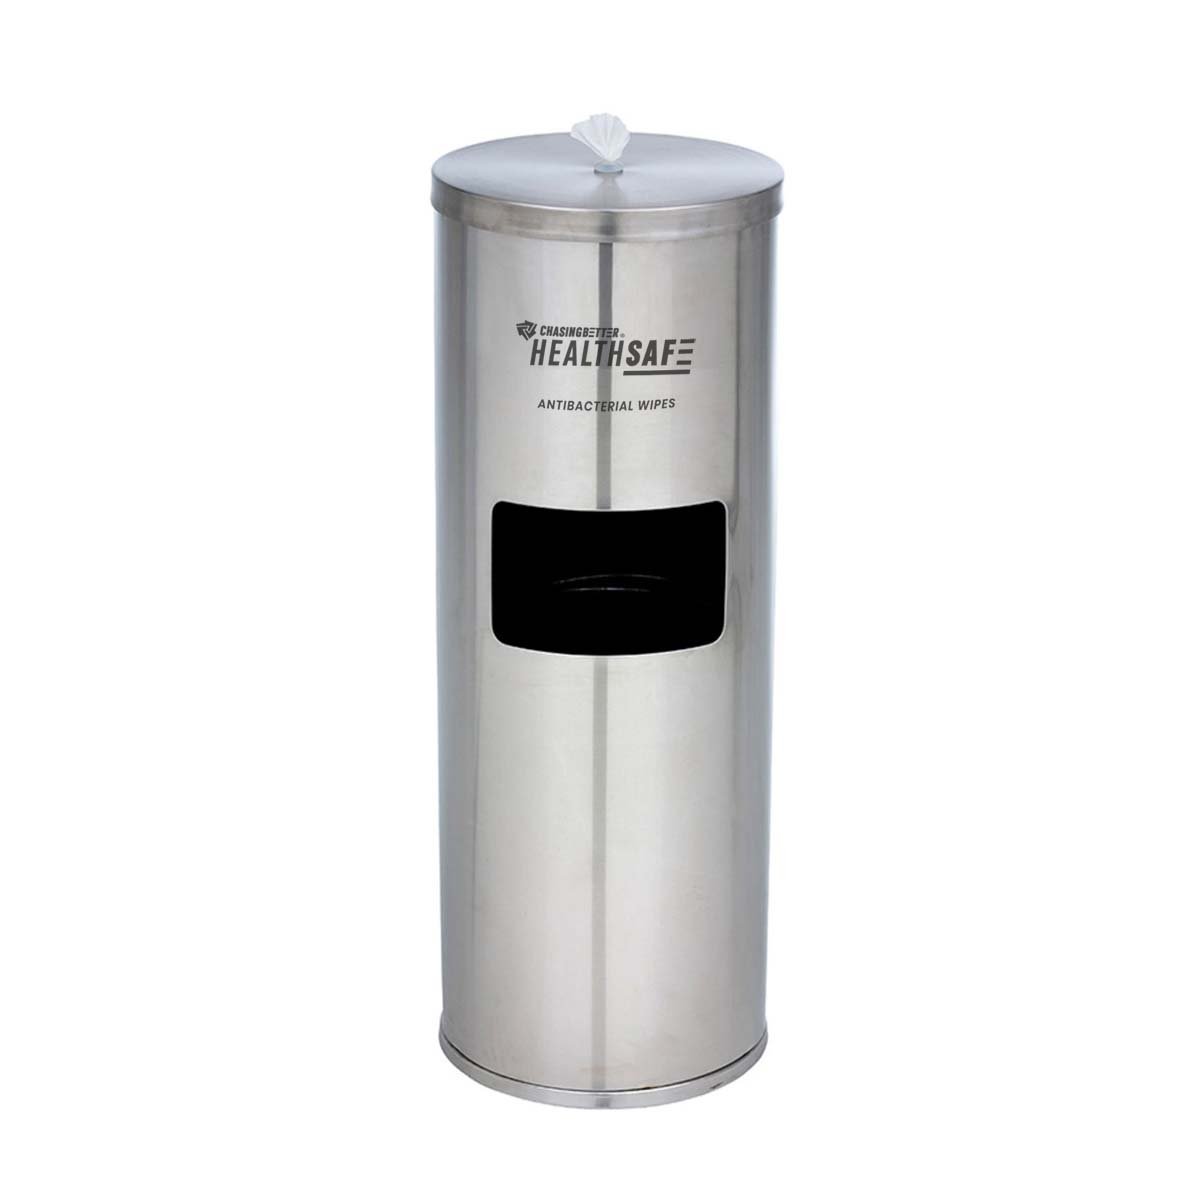 ChasingBetter HealthSafe - Antibacterial Wipes Tower/Bin Dispenser